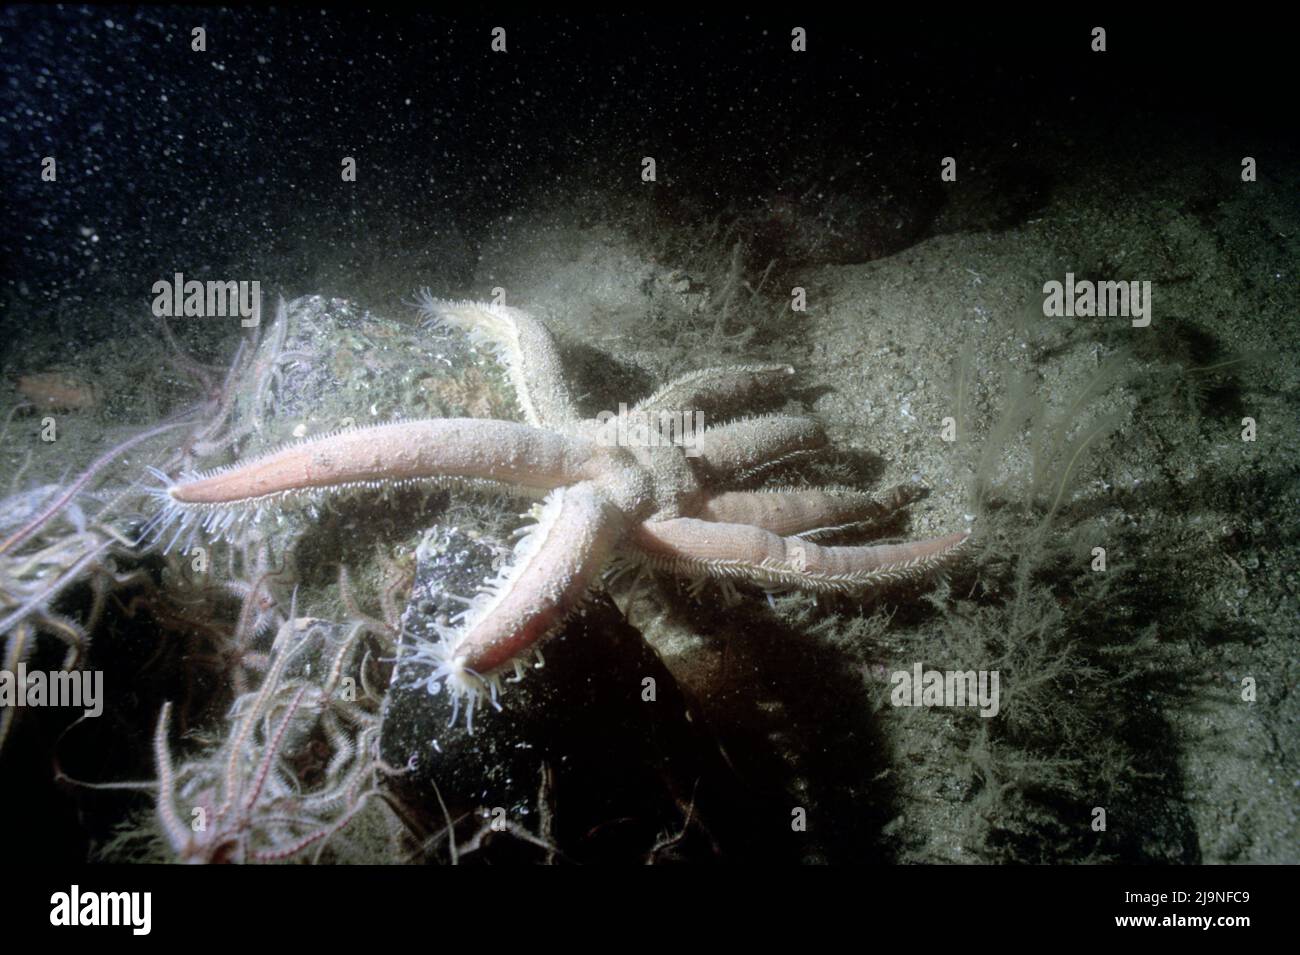 Seven-armed Starfish - Luidia ciliaris, Echinoderms, predator, scavenger, moves around on tubular legs, Brittlestars (Ophiuroidea)  St Abbs UK 1989 Stock Photo